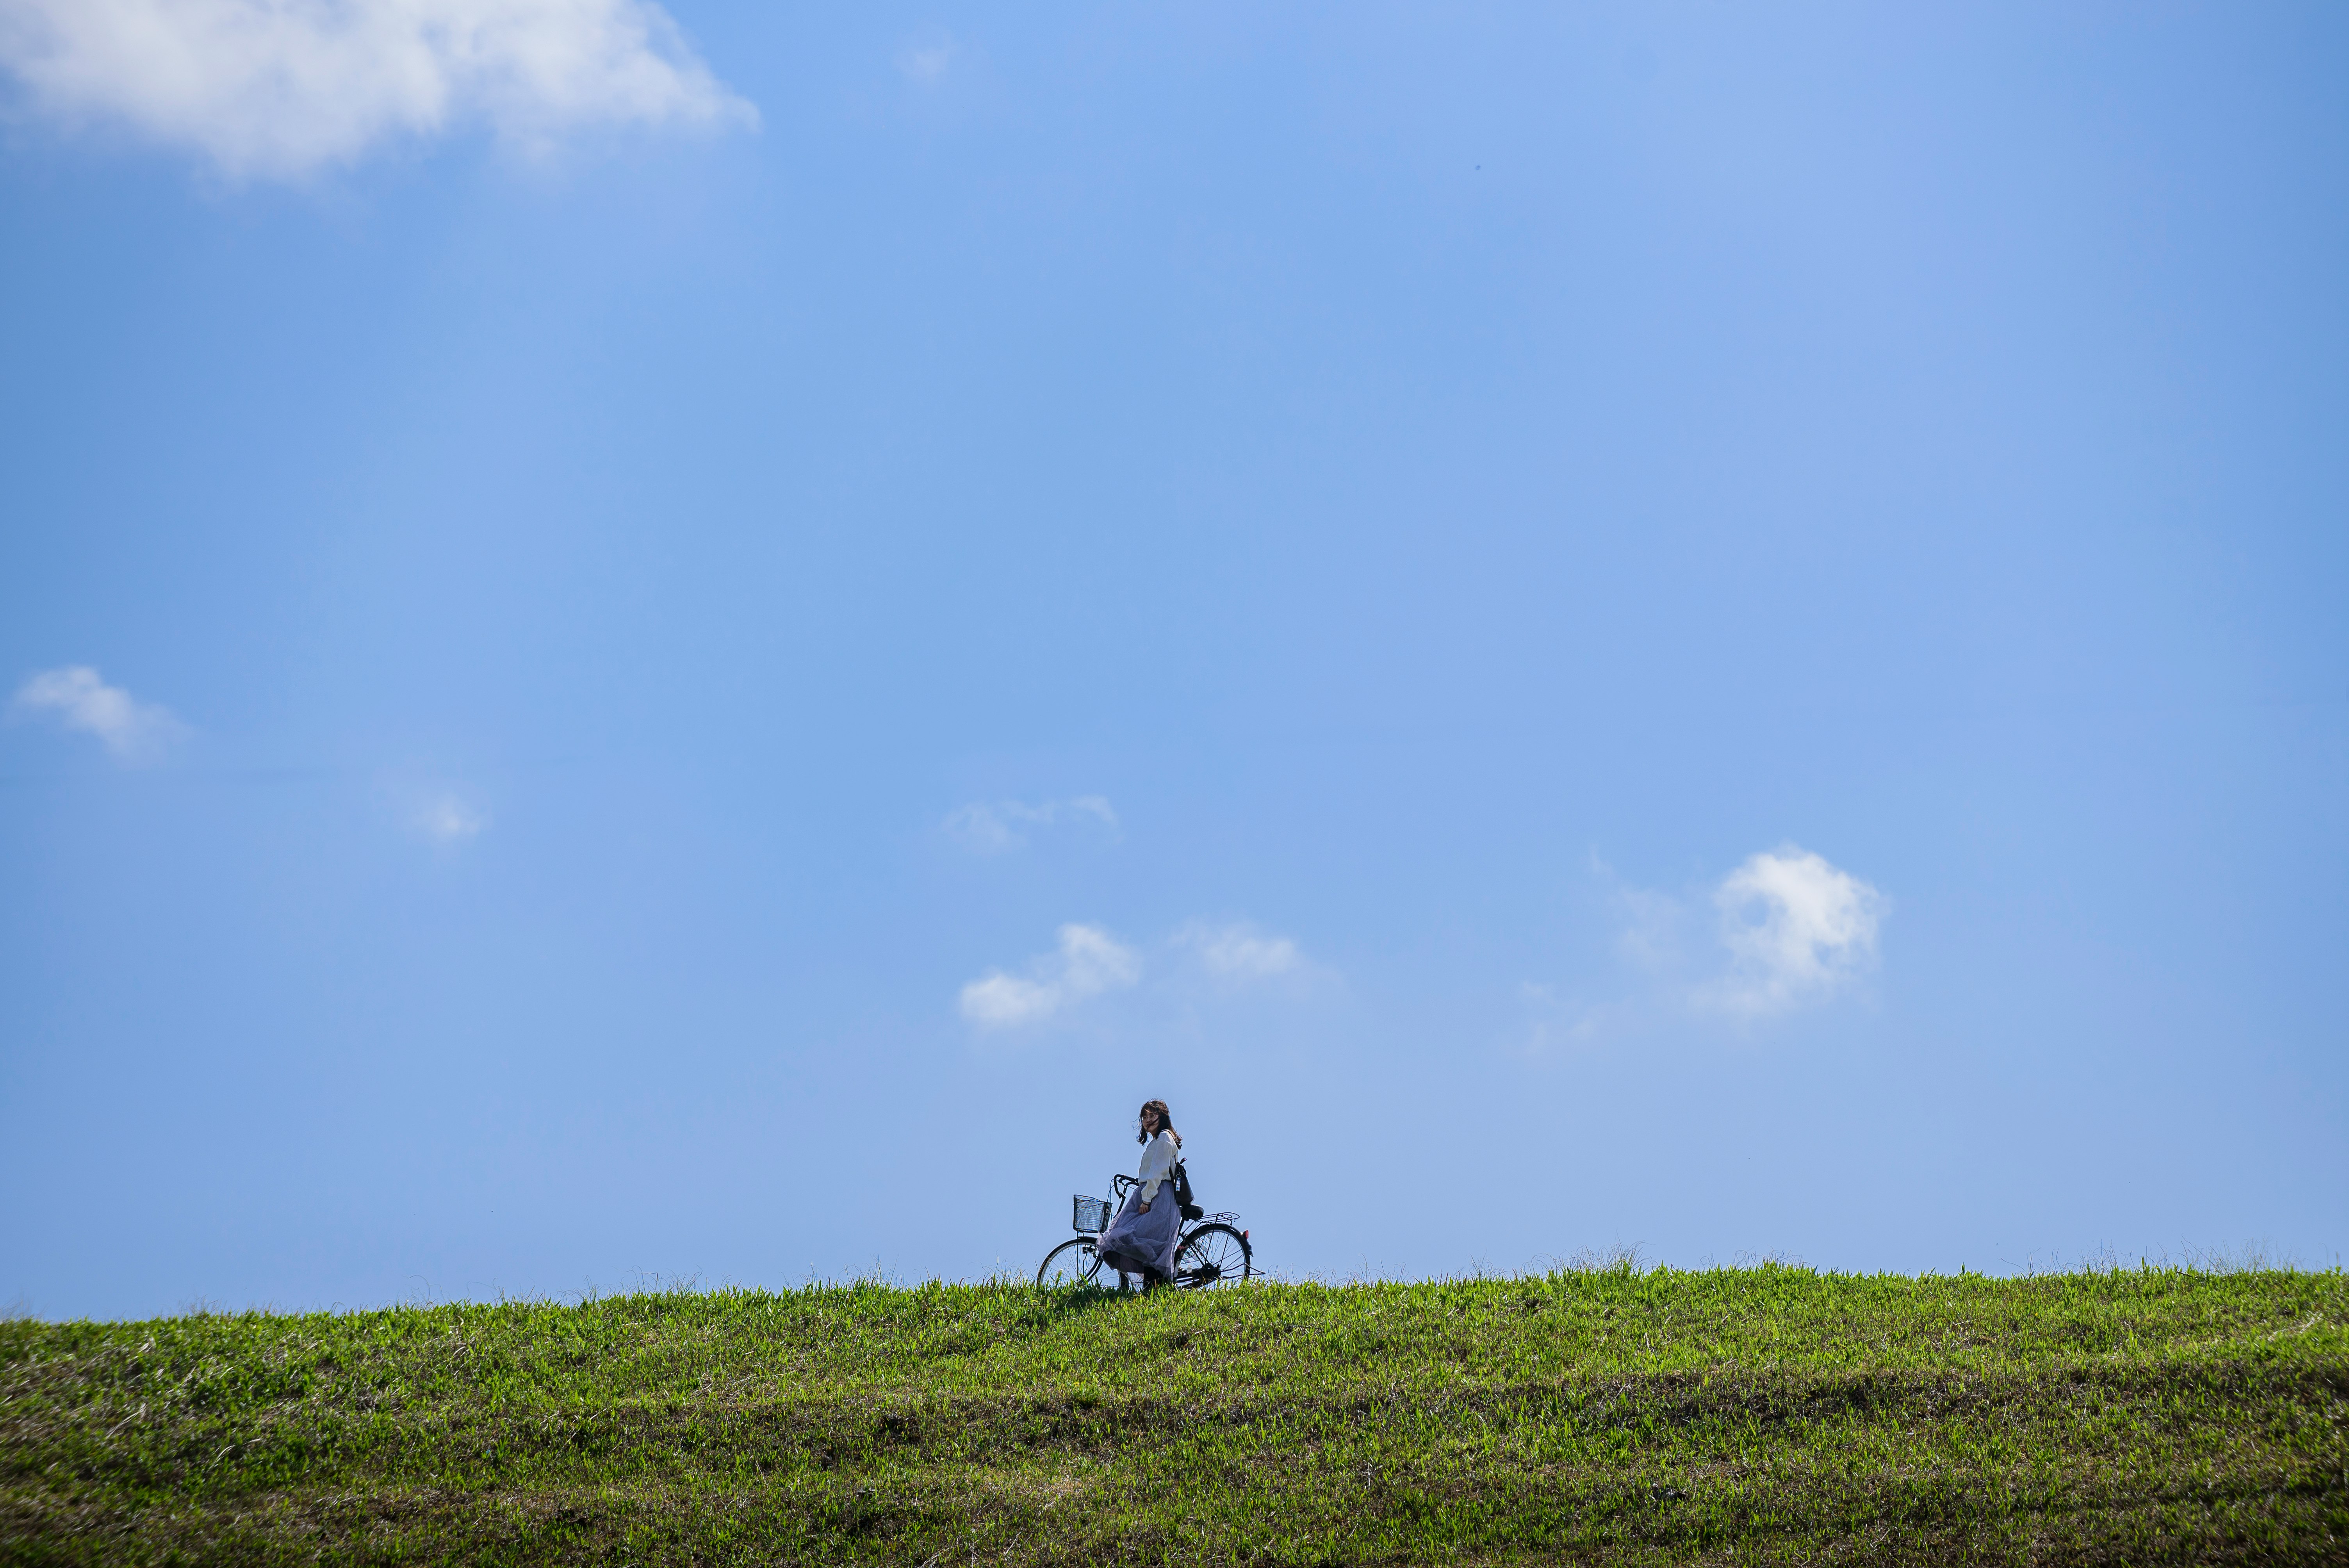 man in black jacket sitting on green grass field under blue sky during daytime